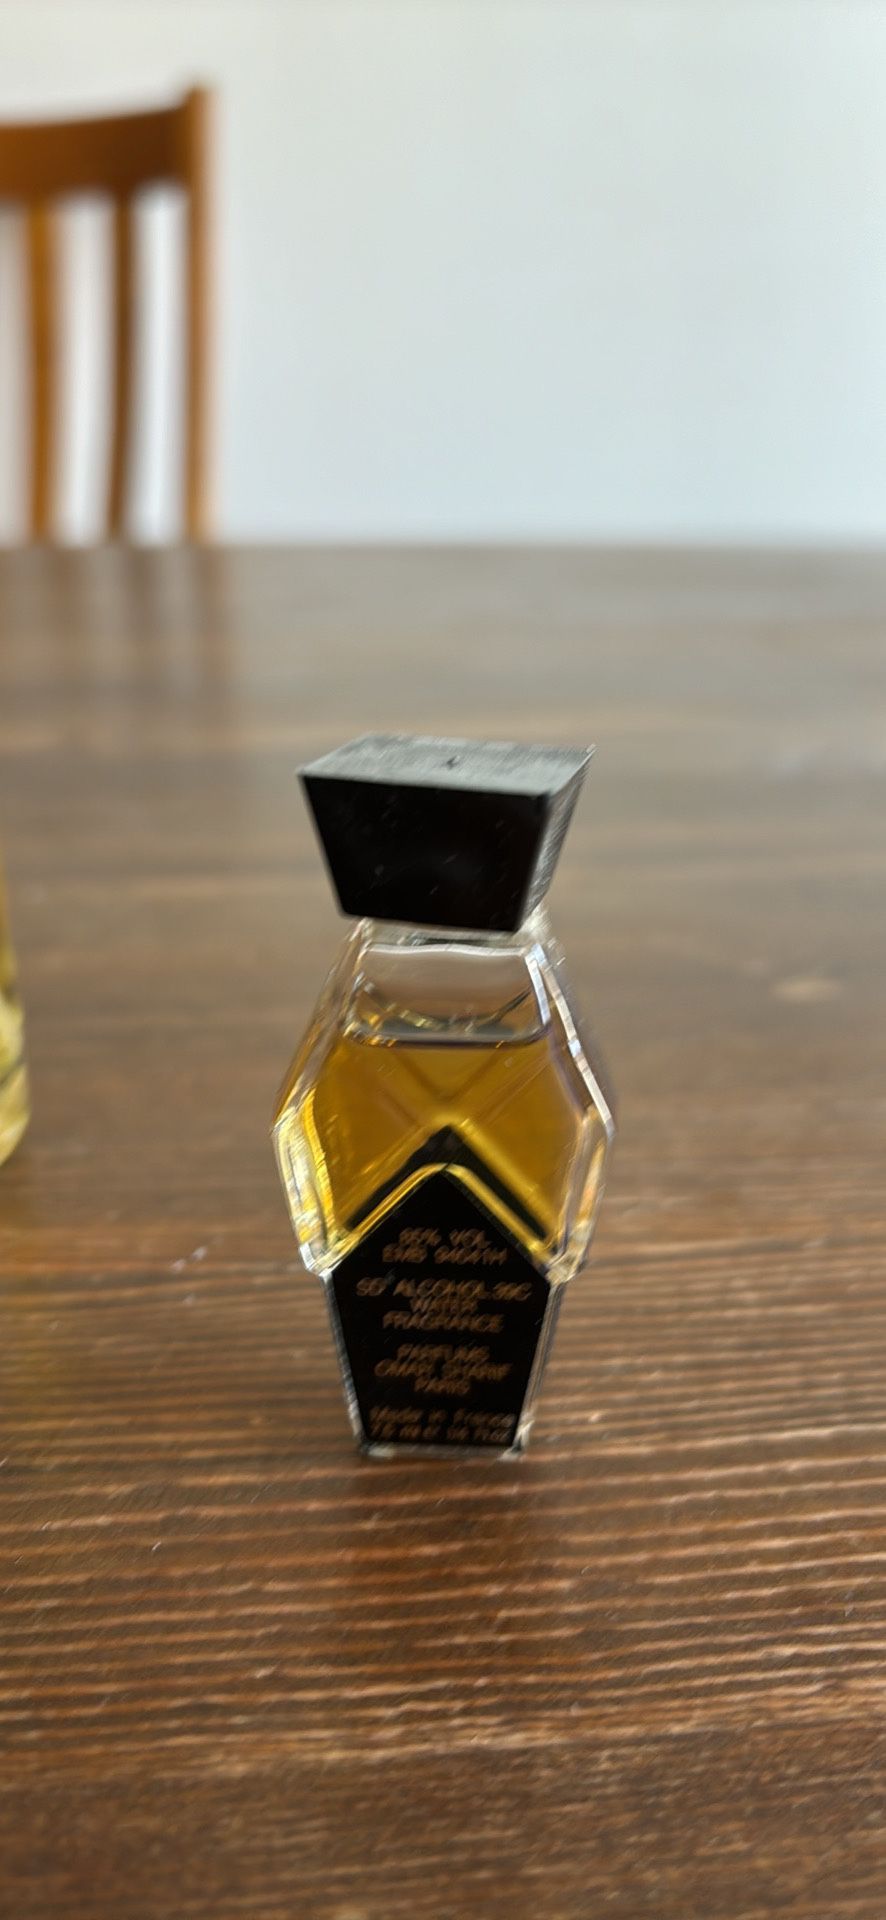 Omar Sharif Eau de Parfum 7.5 ml made in France vintage 1980’s slightly used